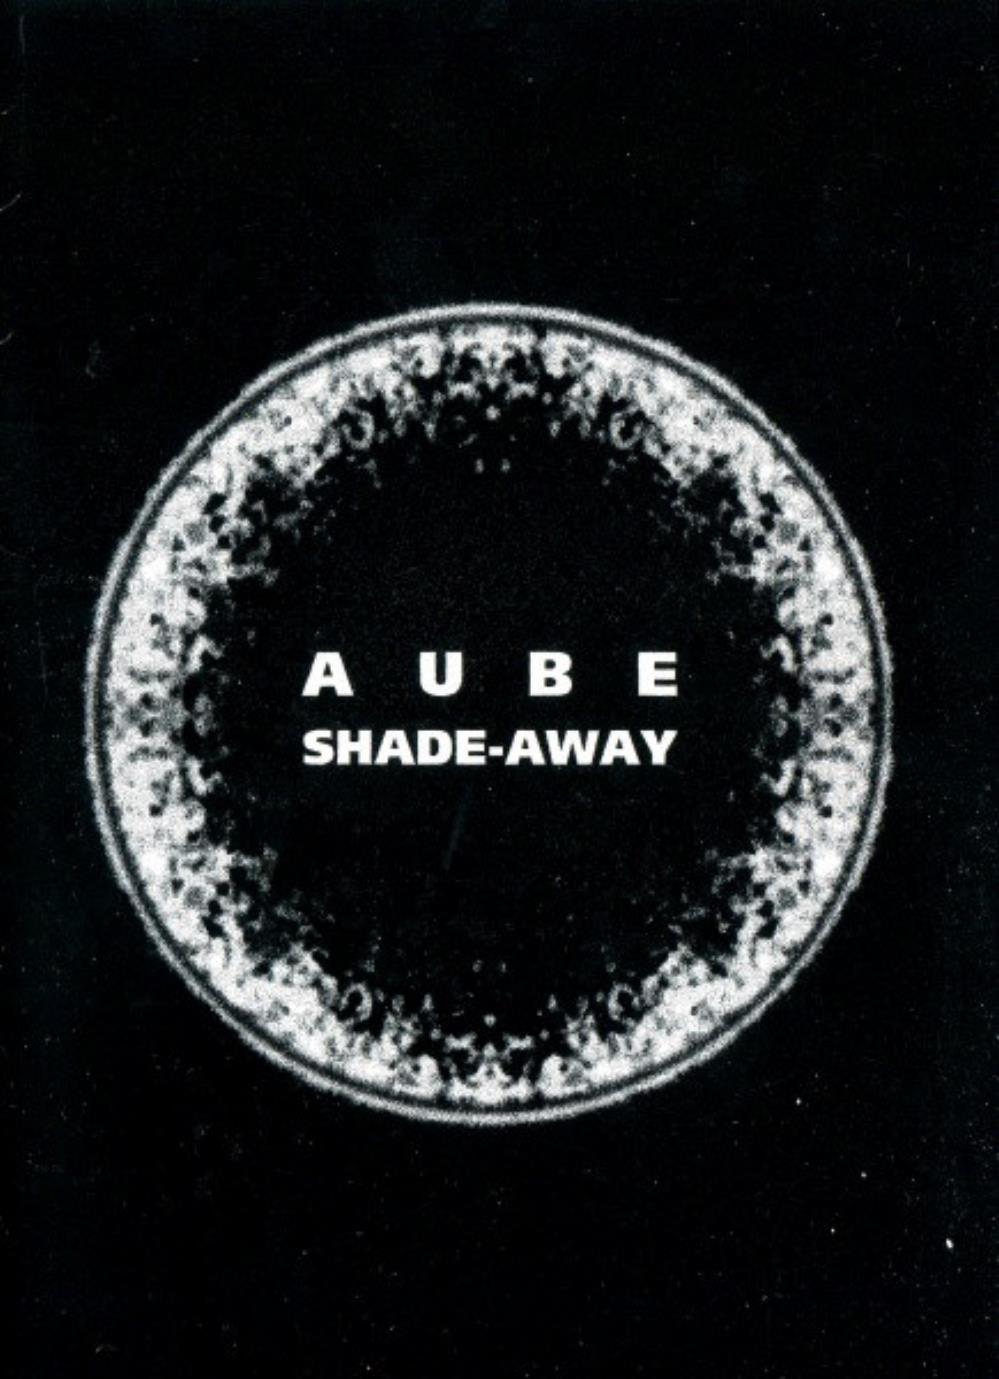 Aube Shade-Away album cover